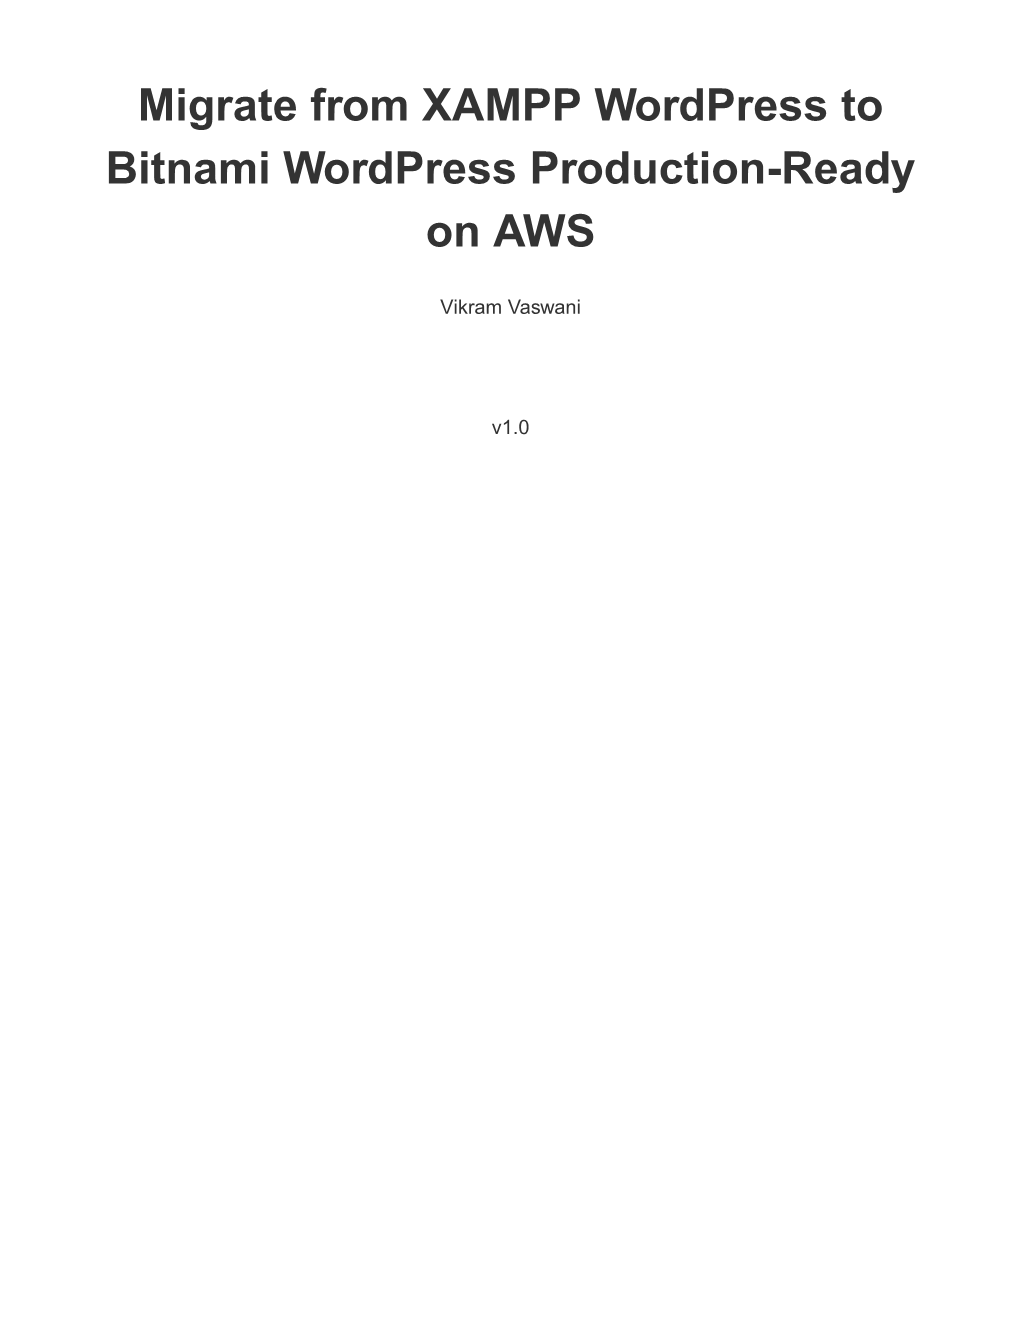 Migrate from XAMPP Wordpress to Bitnami Wordpress Production-Ready on AWS